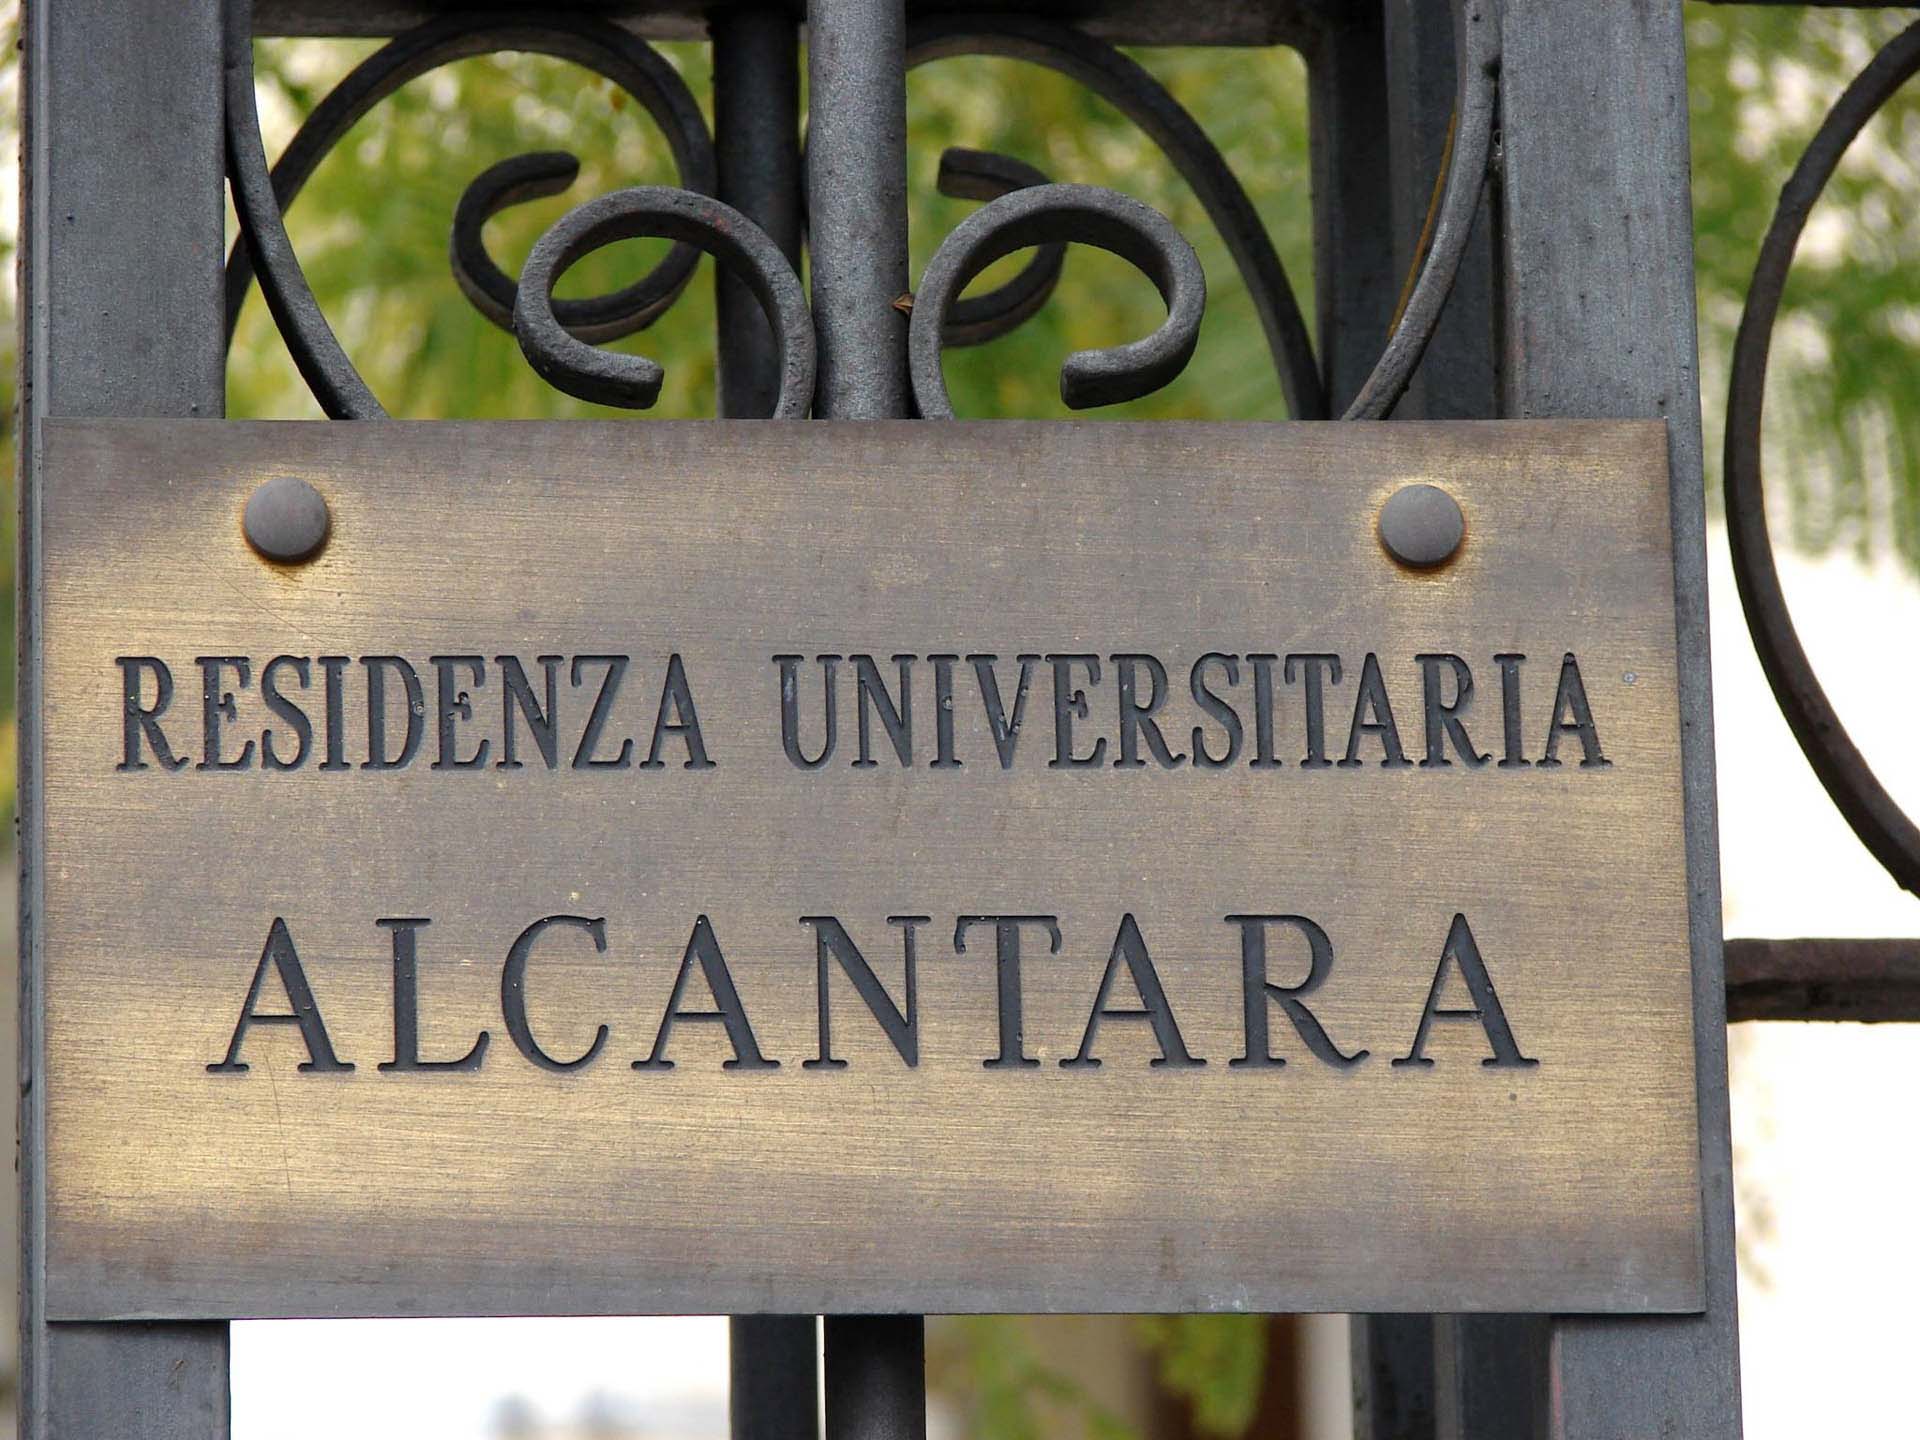 Residenza Universitaria Alcantara